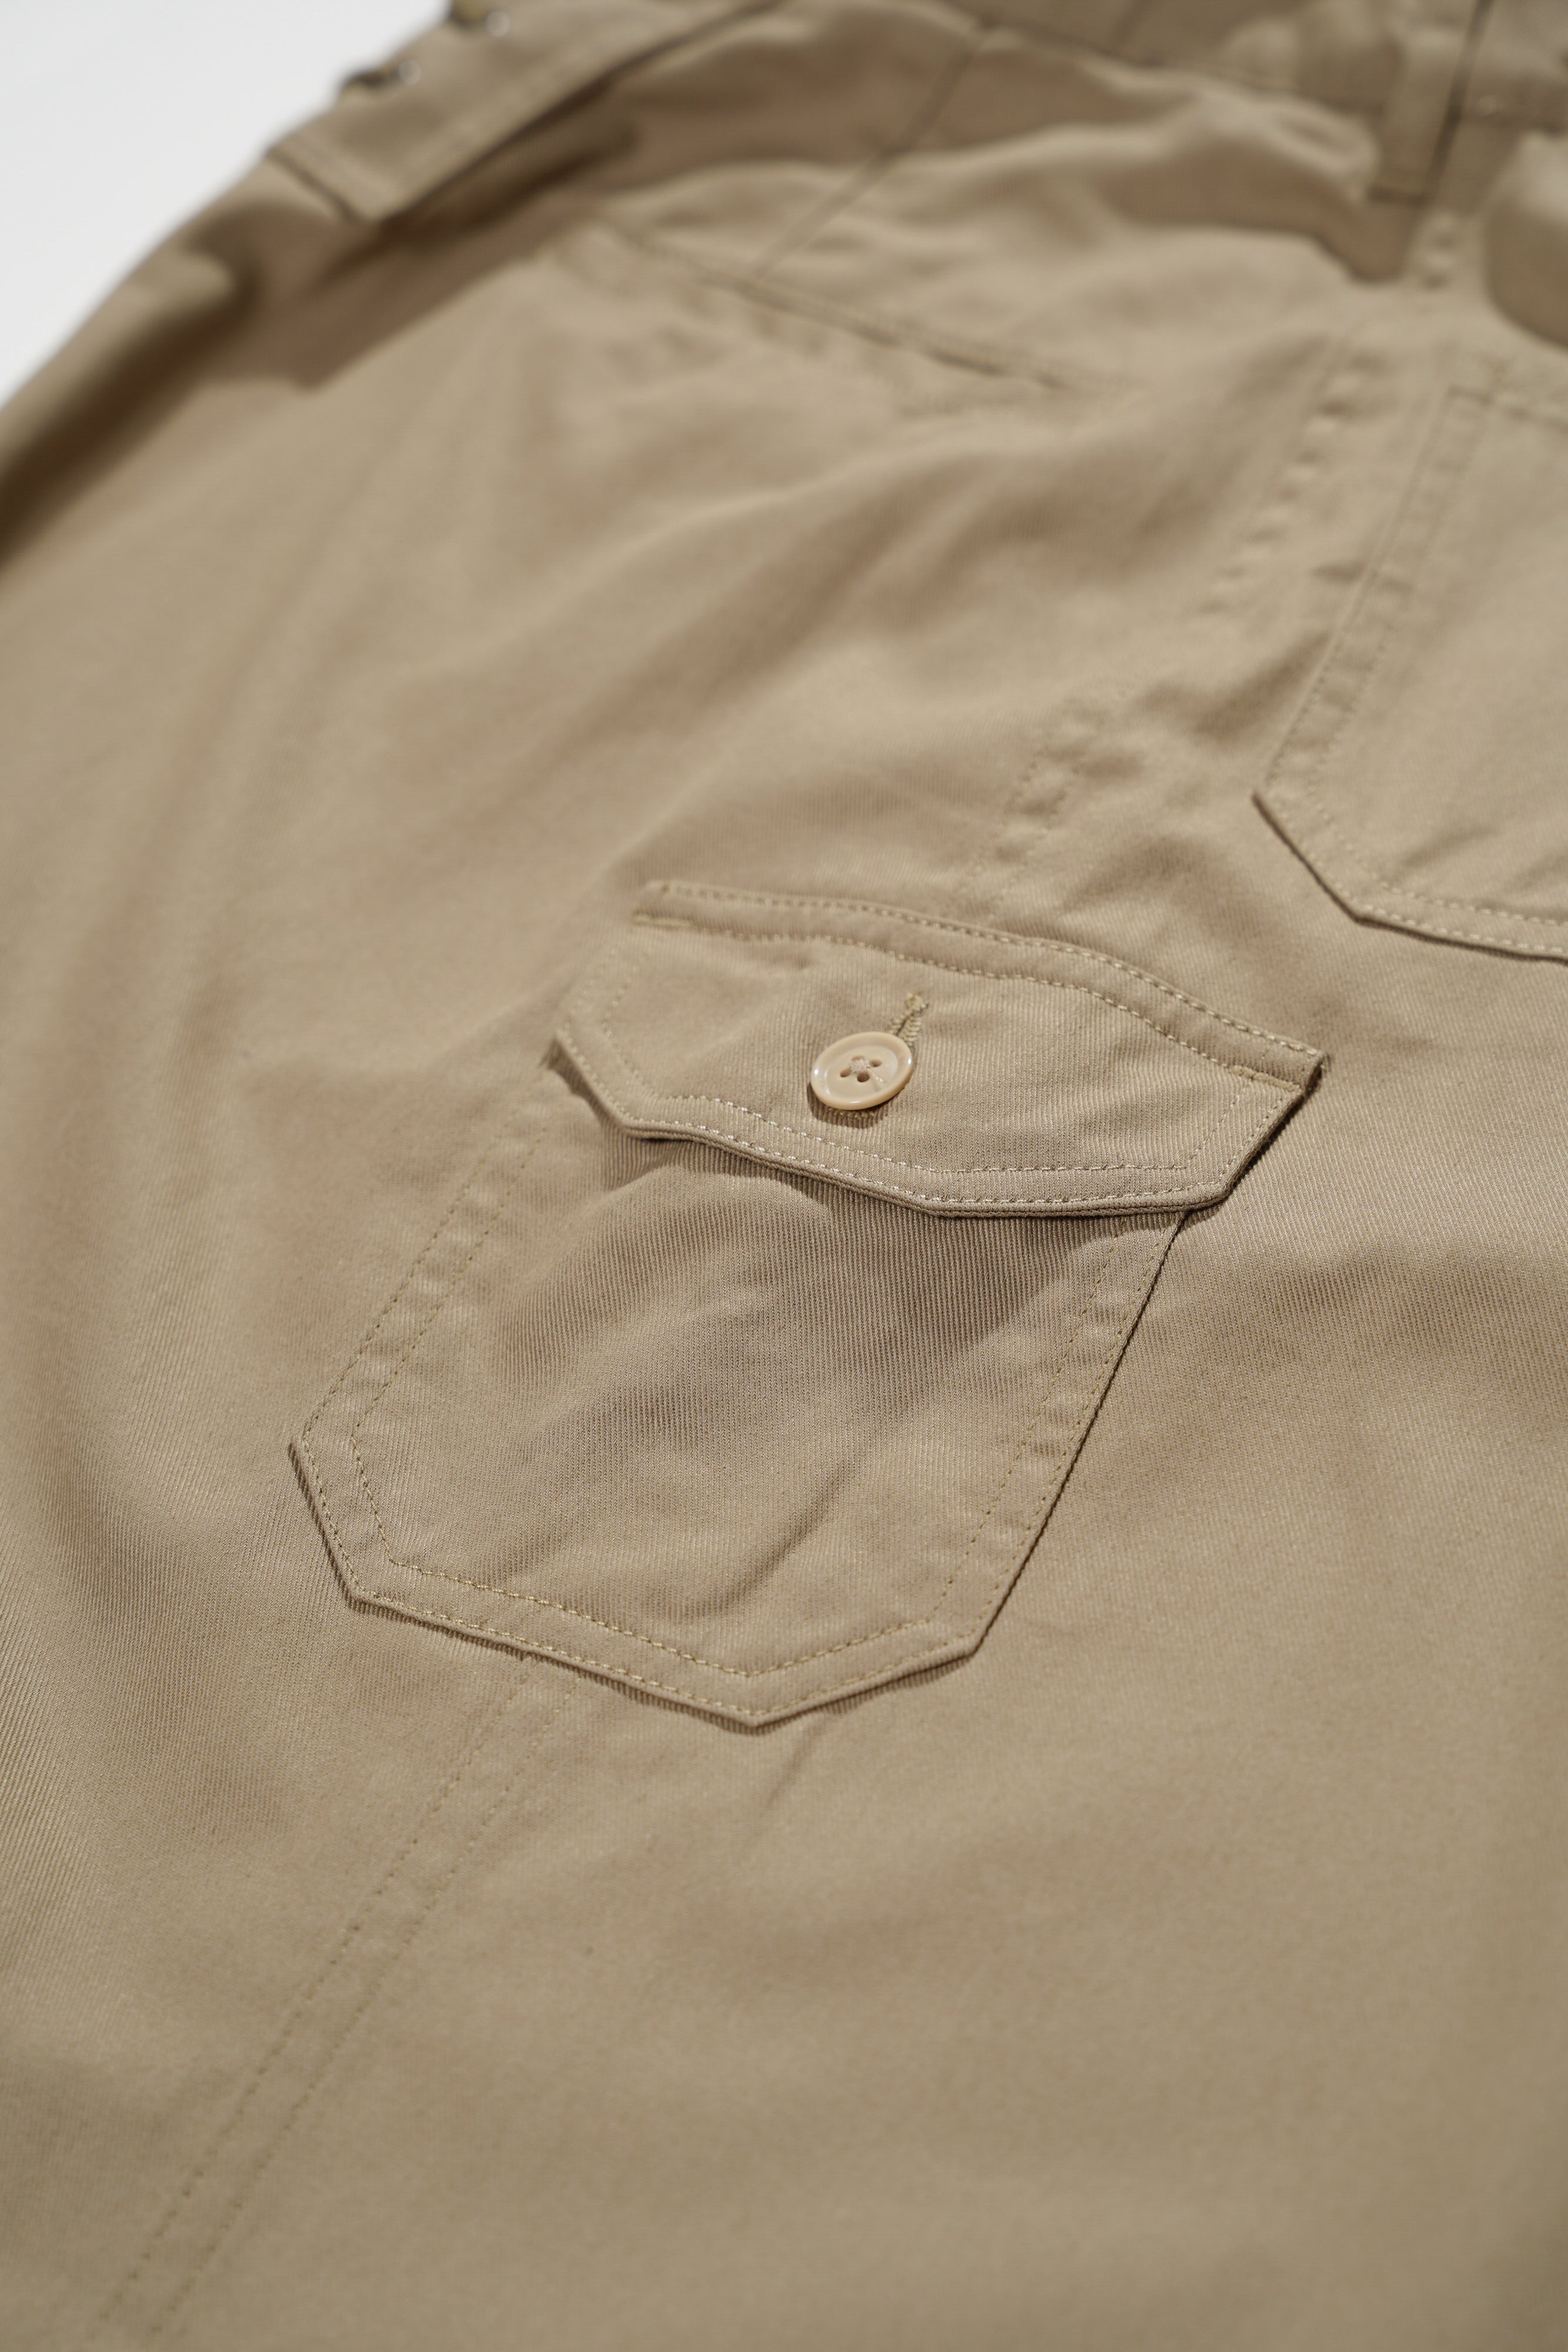 Engineered Garments Blank Label Lace Up Skirt - Khaki 6.5oz Flat Twill